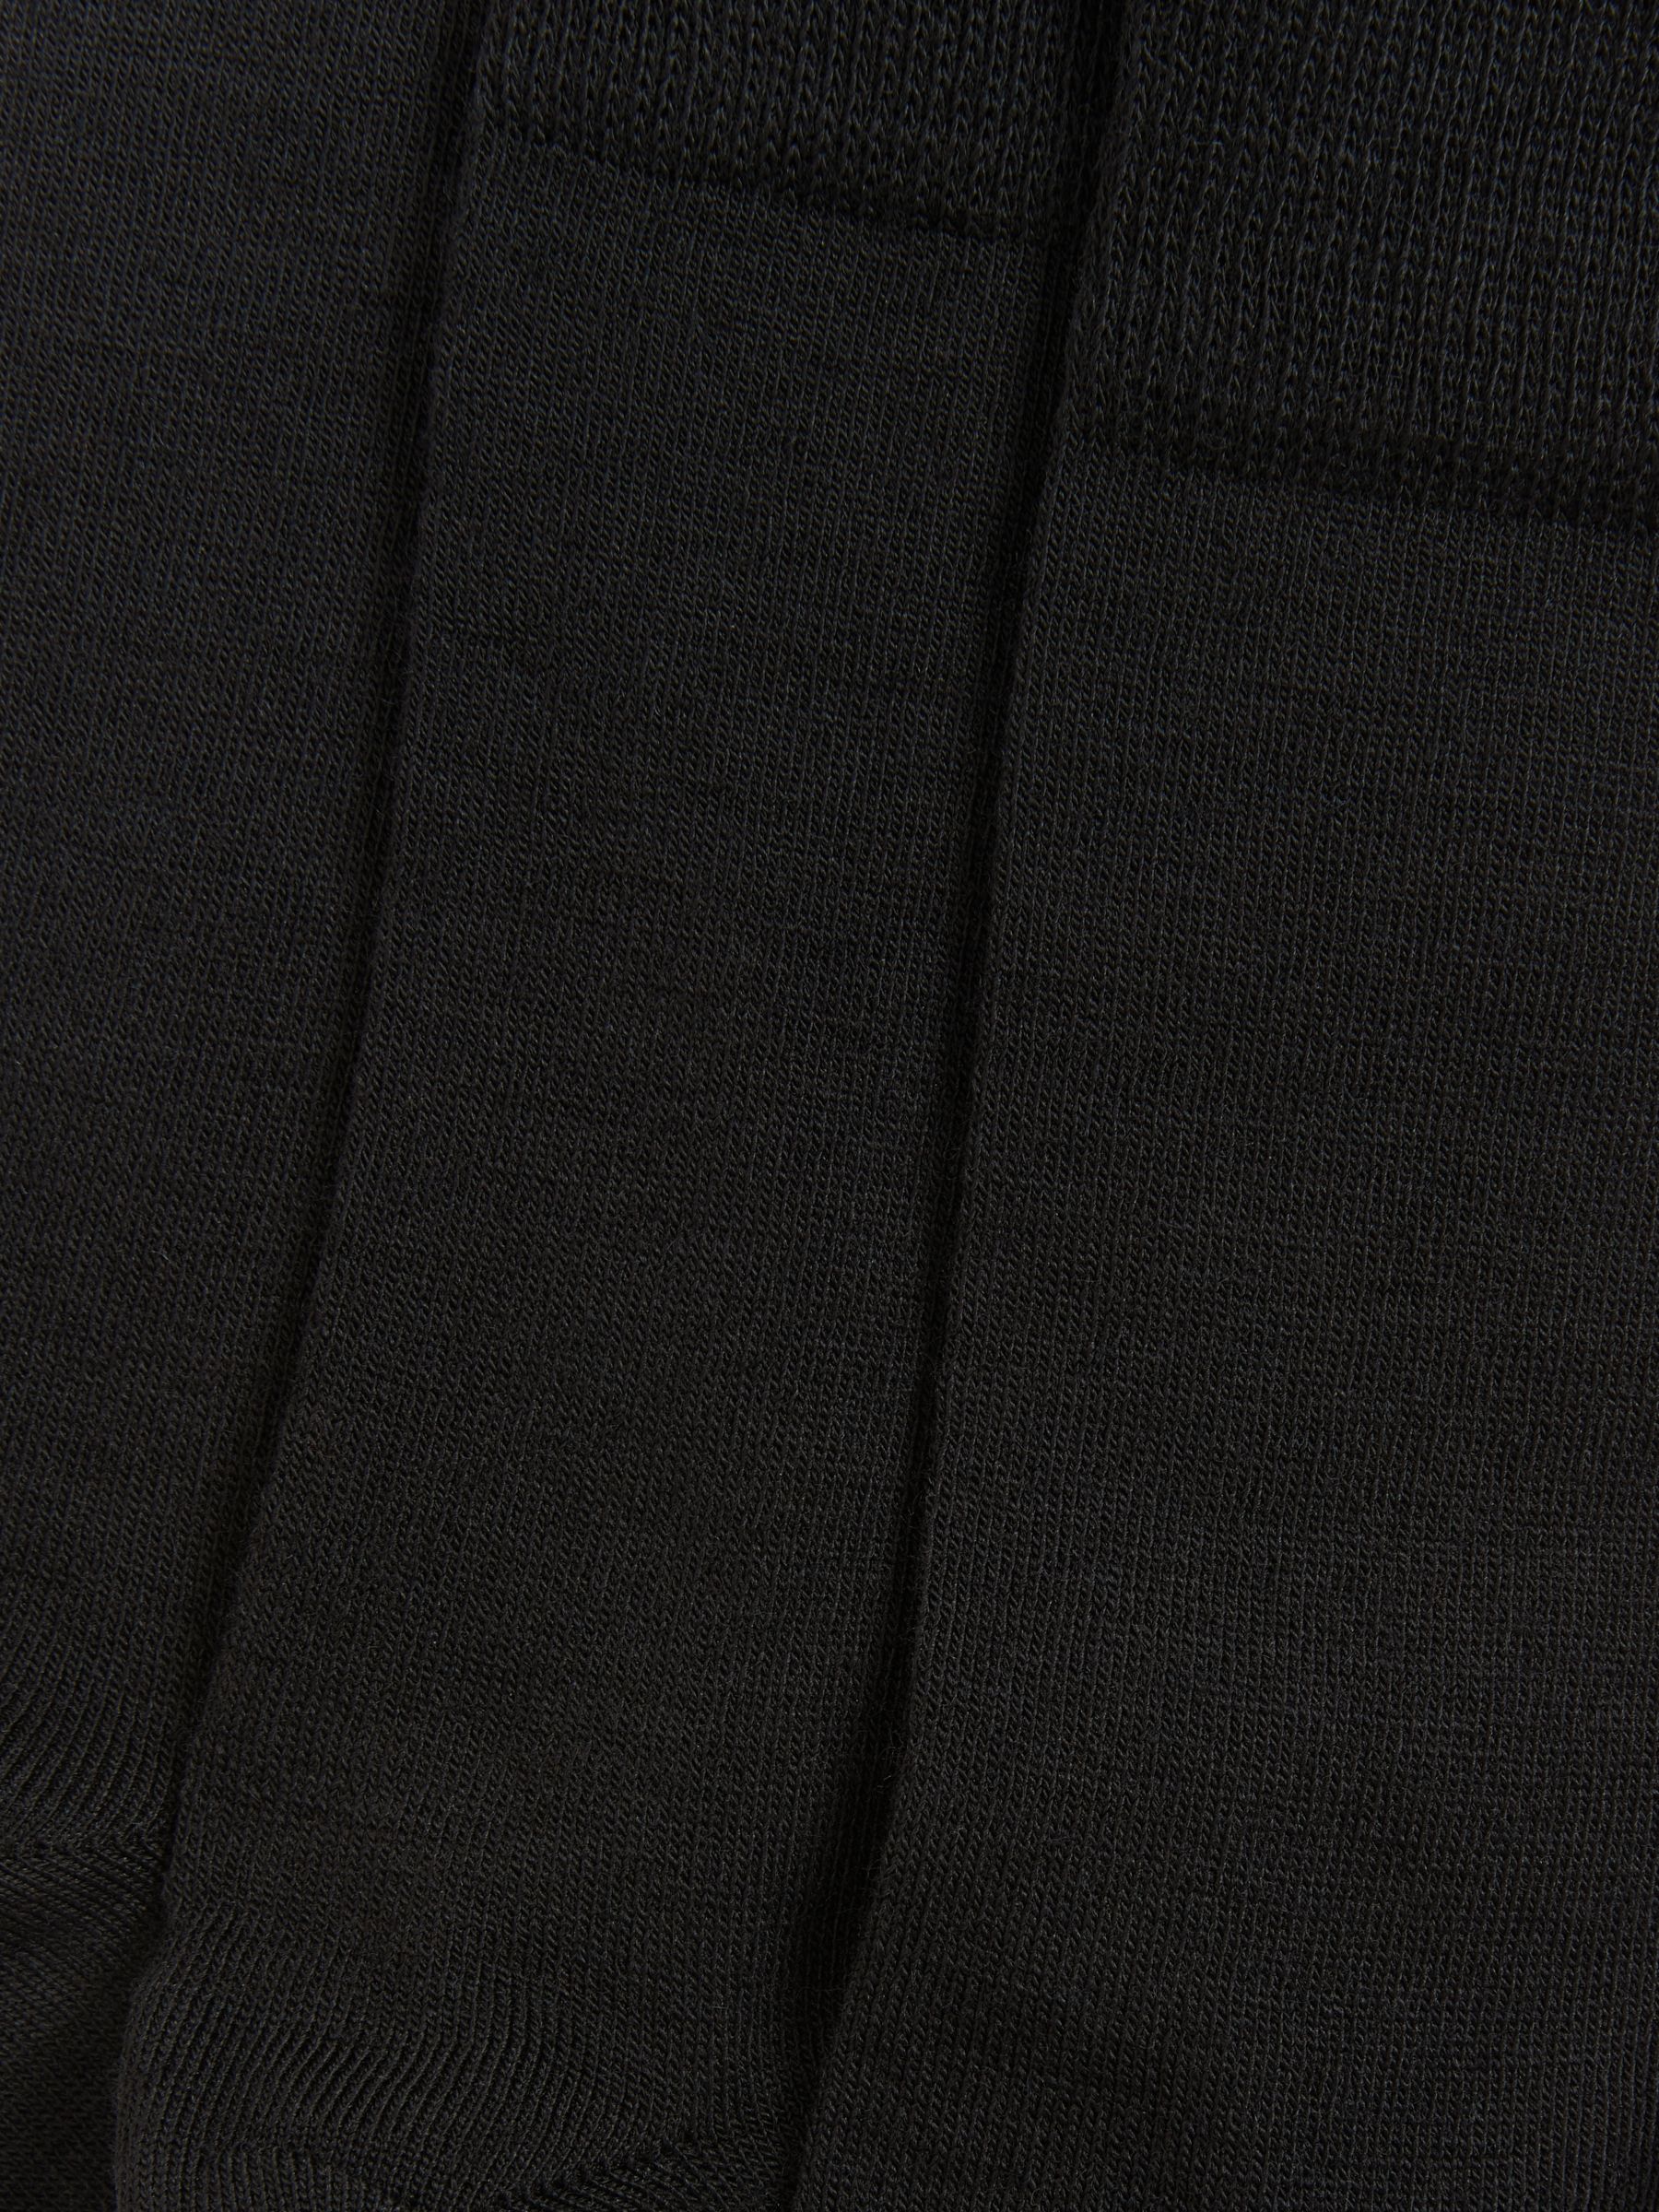 John Lewis Wool Mix Men's Socks, Pack of 3, Black, S